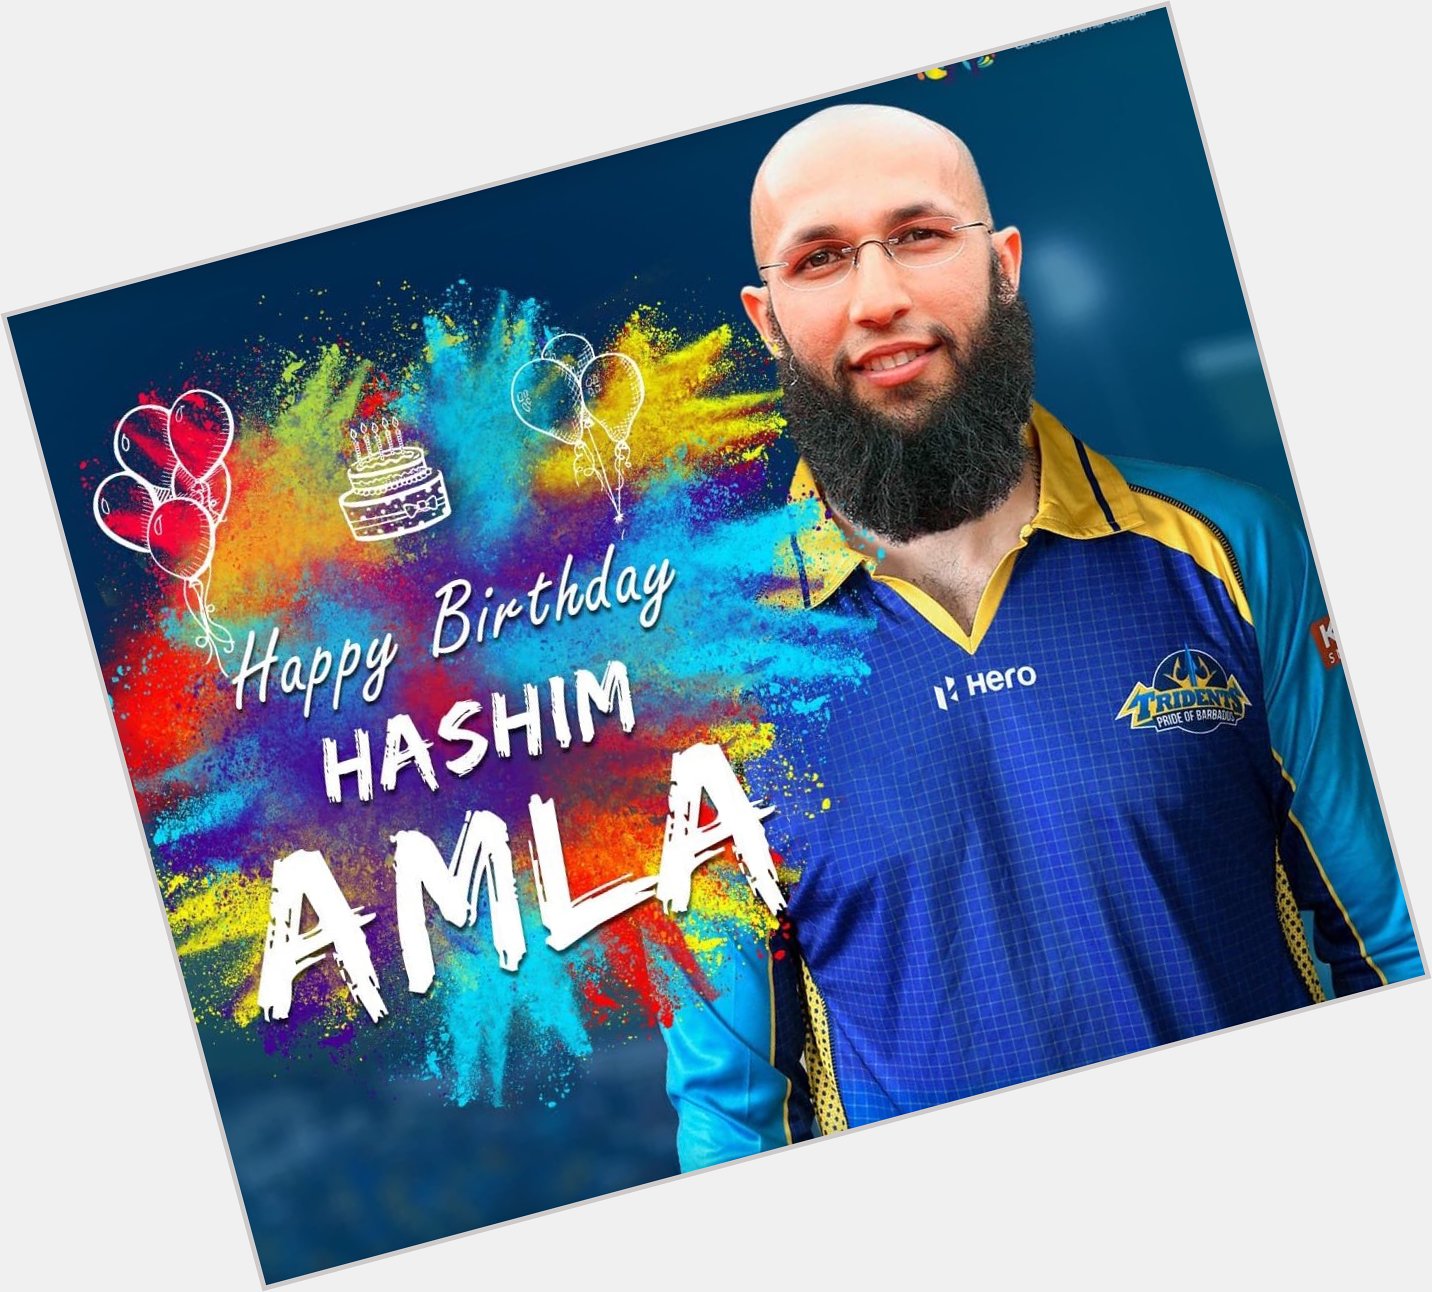 Happy birthday Hashim Amla 